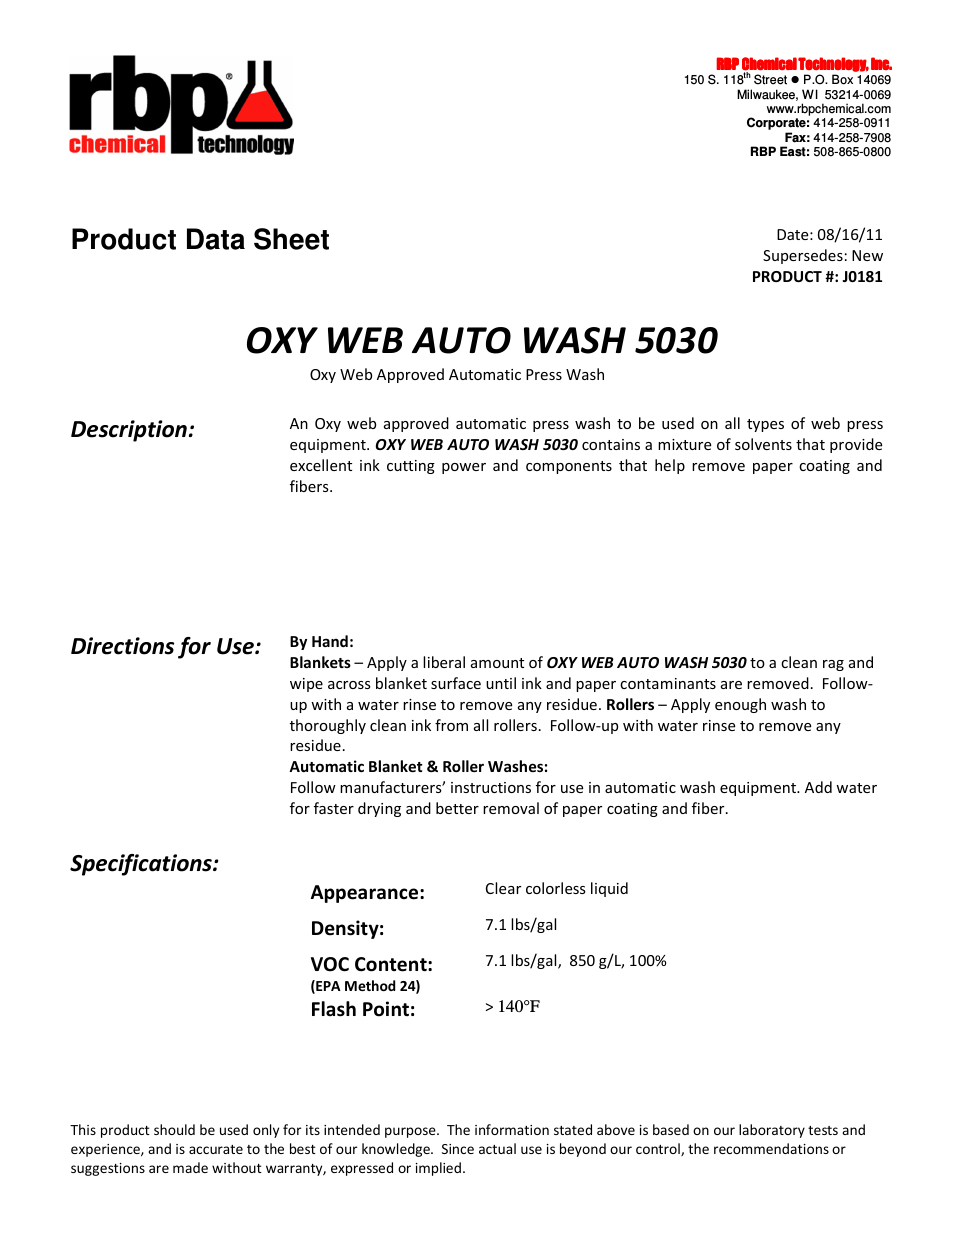 J0181 OXY WEB AUTO WASH 5030